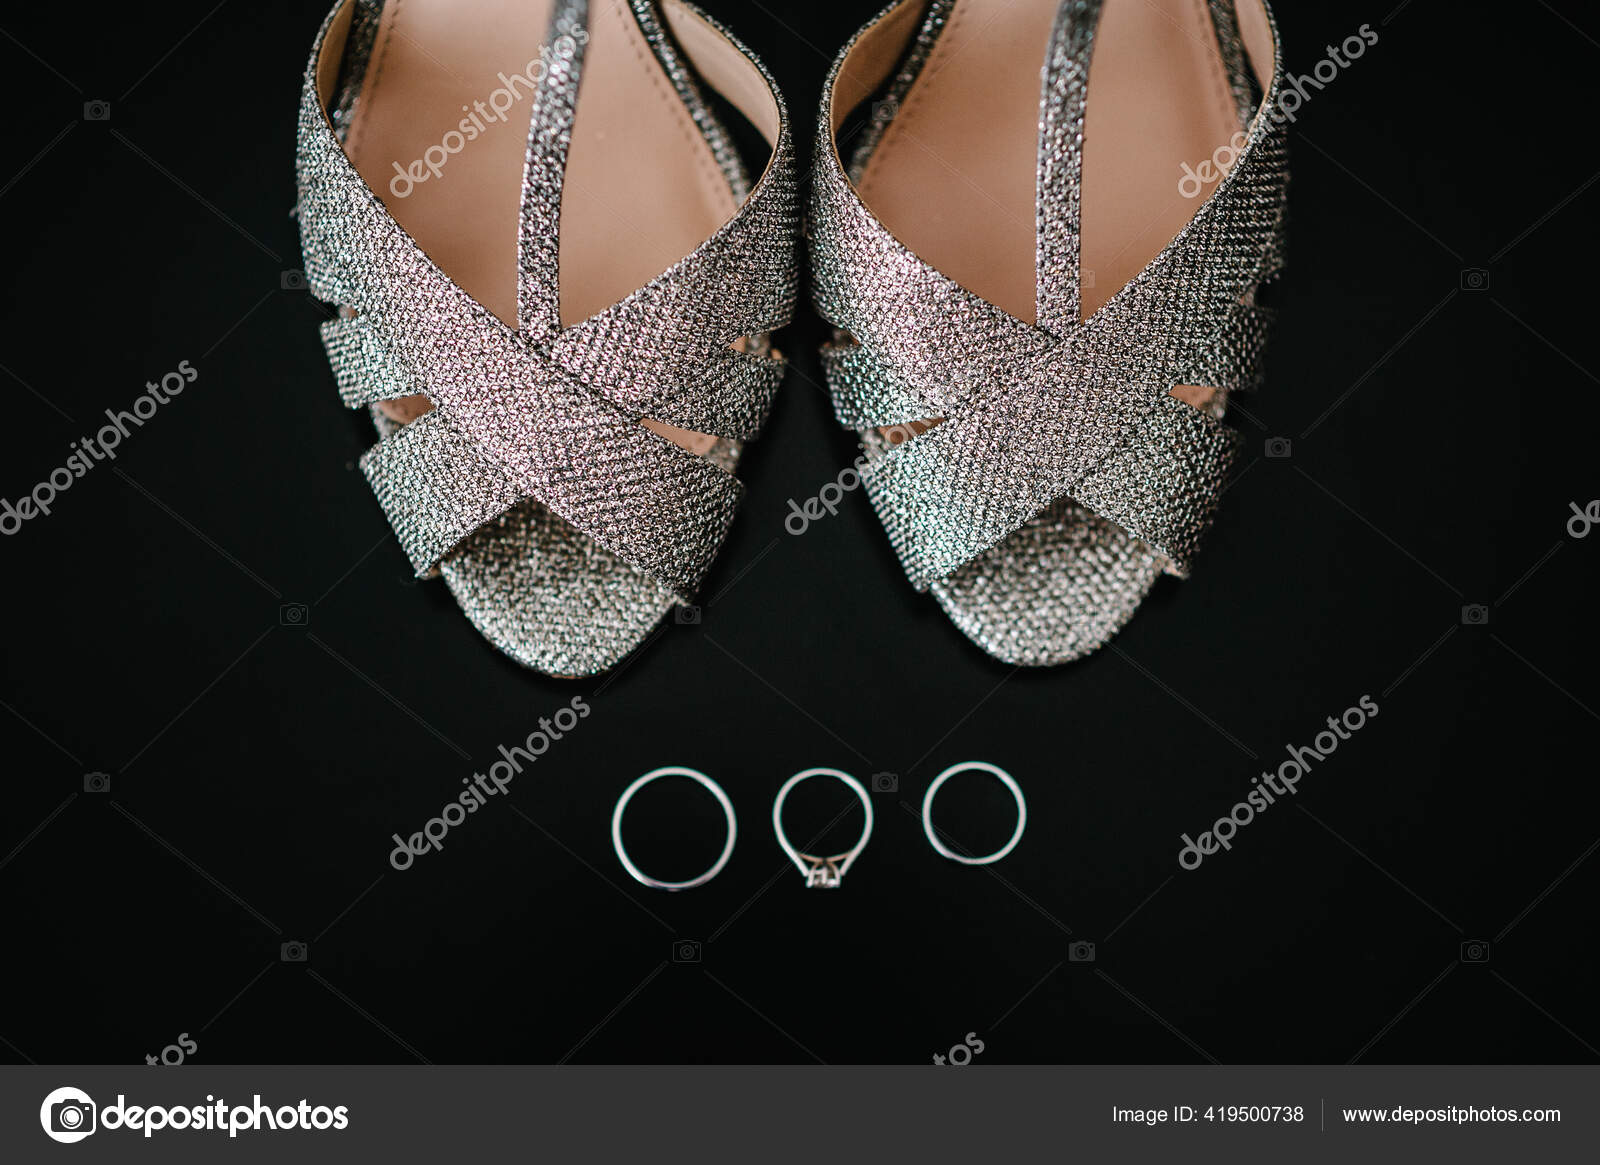 Silver Kitten Heel Strappy Sandal ($32) - Perfect for Weddings